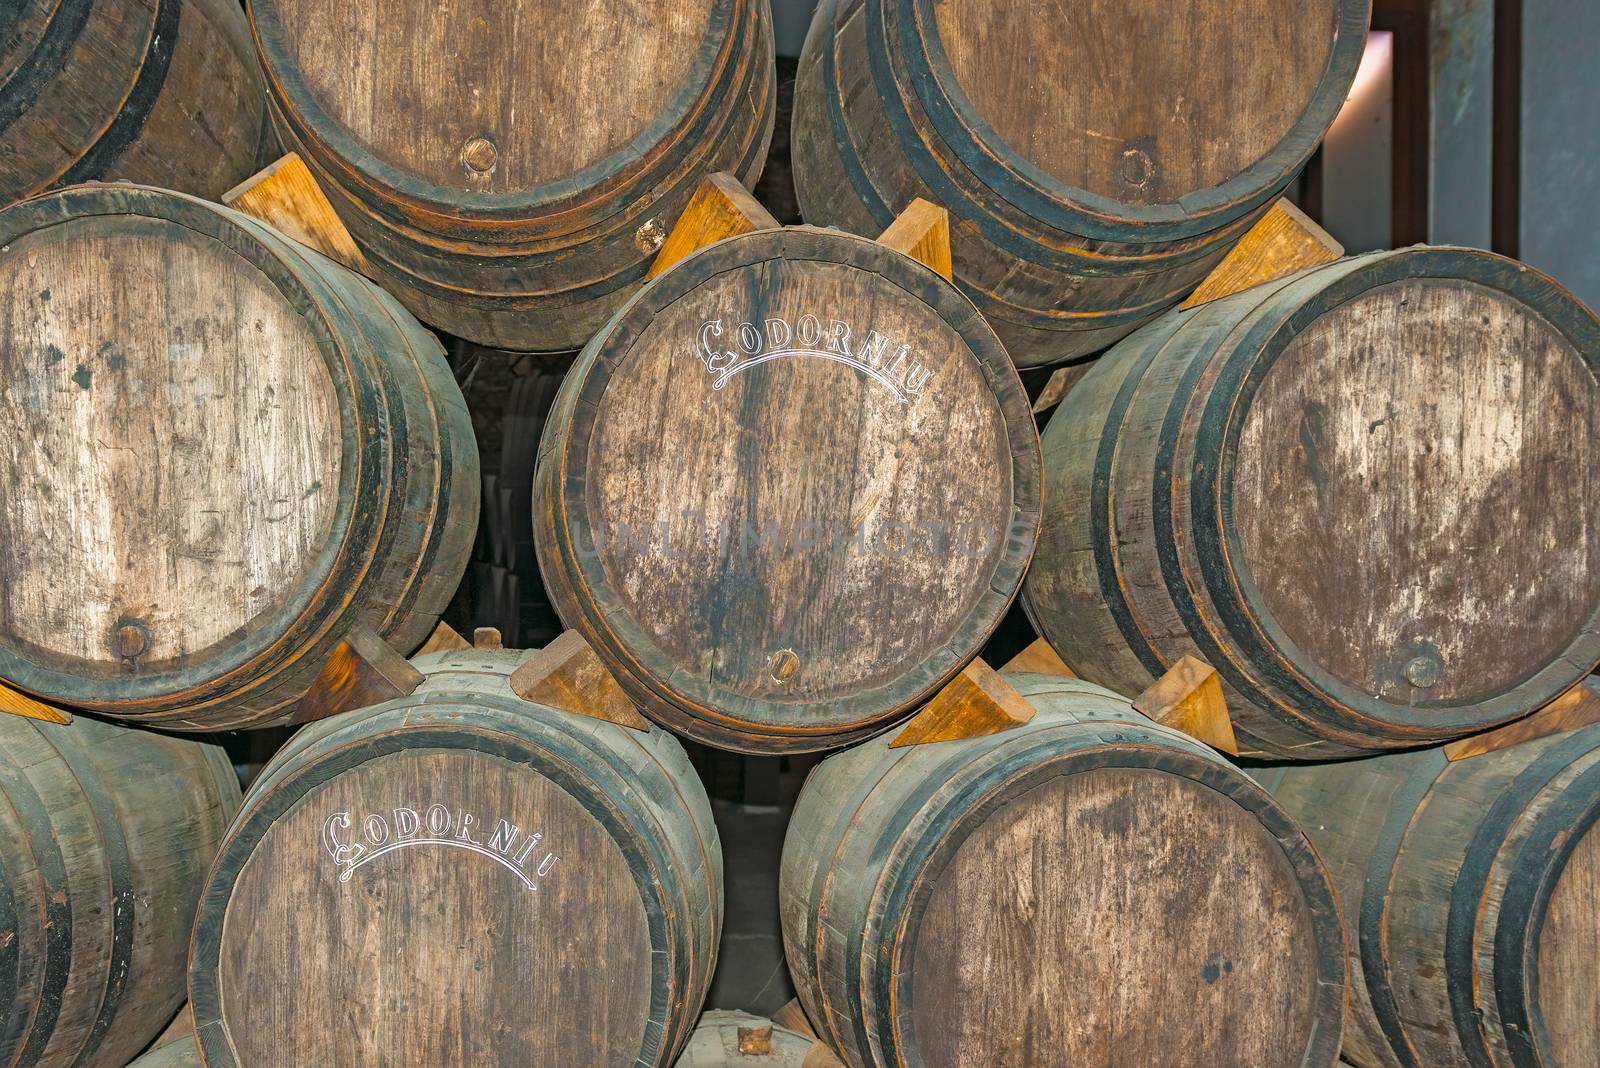 Old wine barrels in Codorniu winery in Spain by Marcus